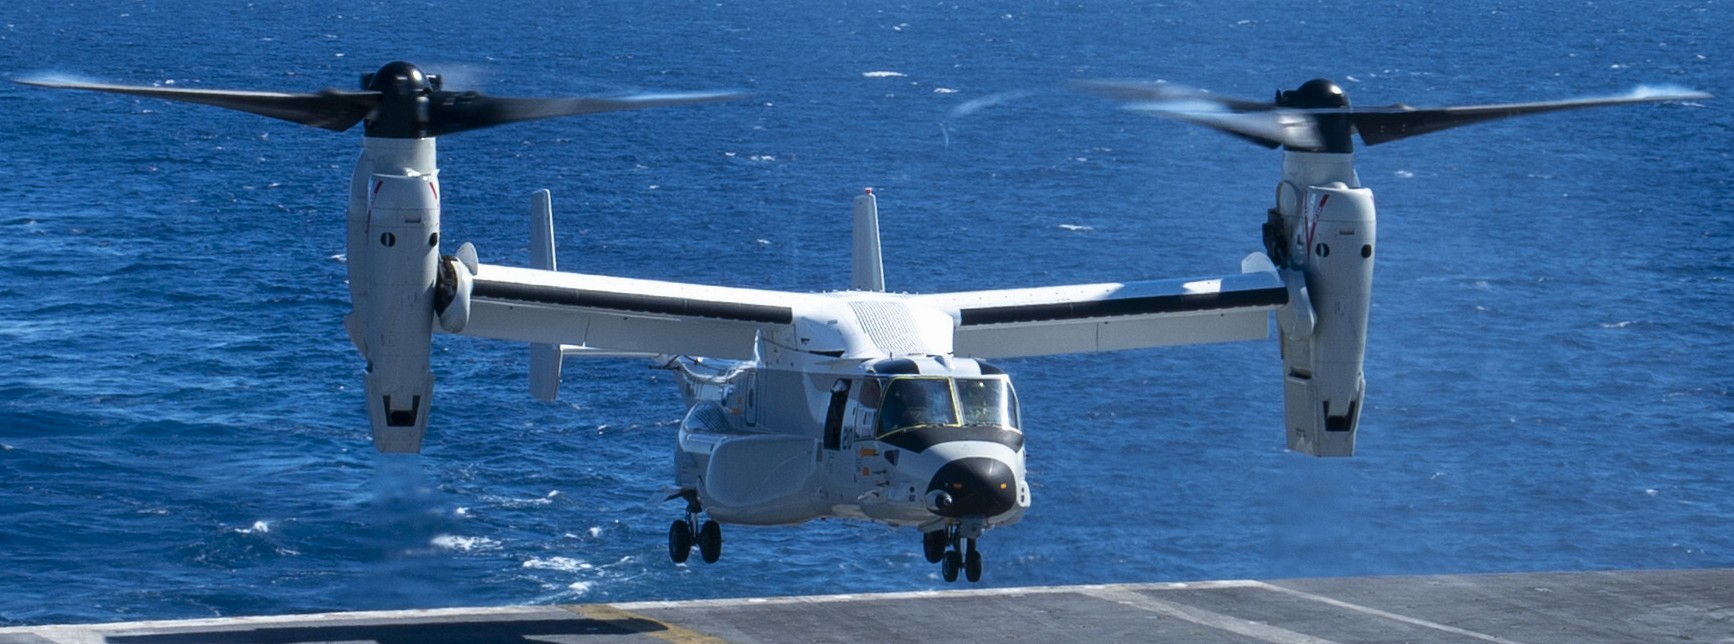 vrm-50 sun hawks fleet logistics multi mission squadron us navy bell boeing cmv-22b osprey replacement frs 16